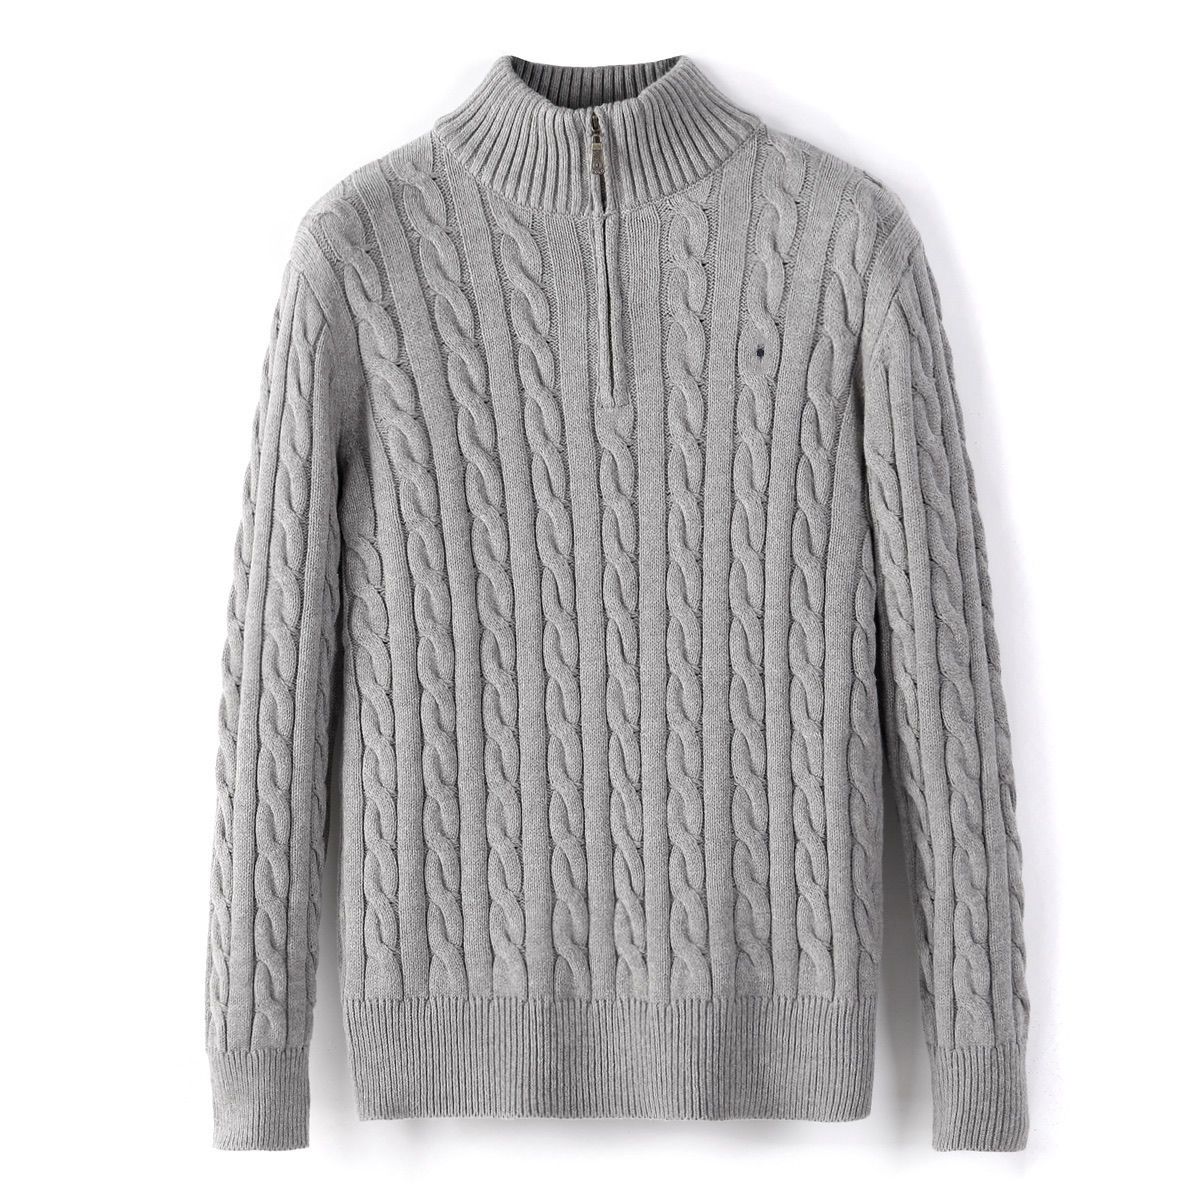 Sweater25